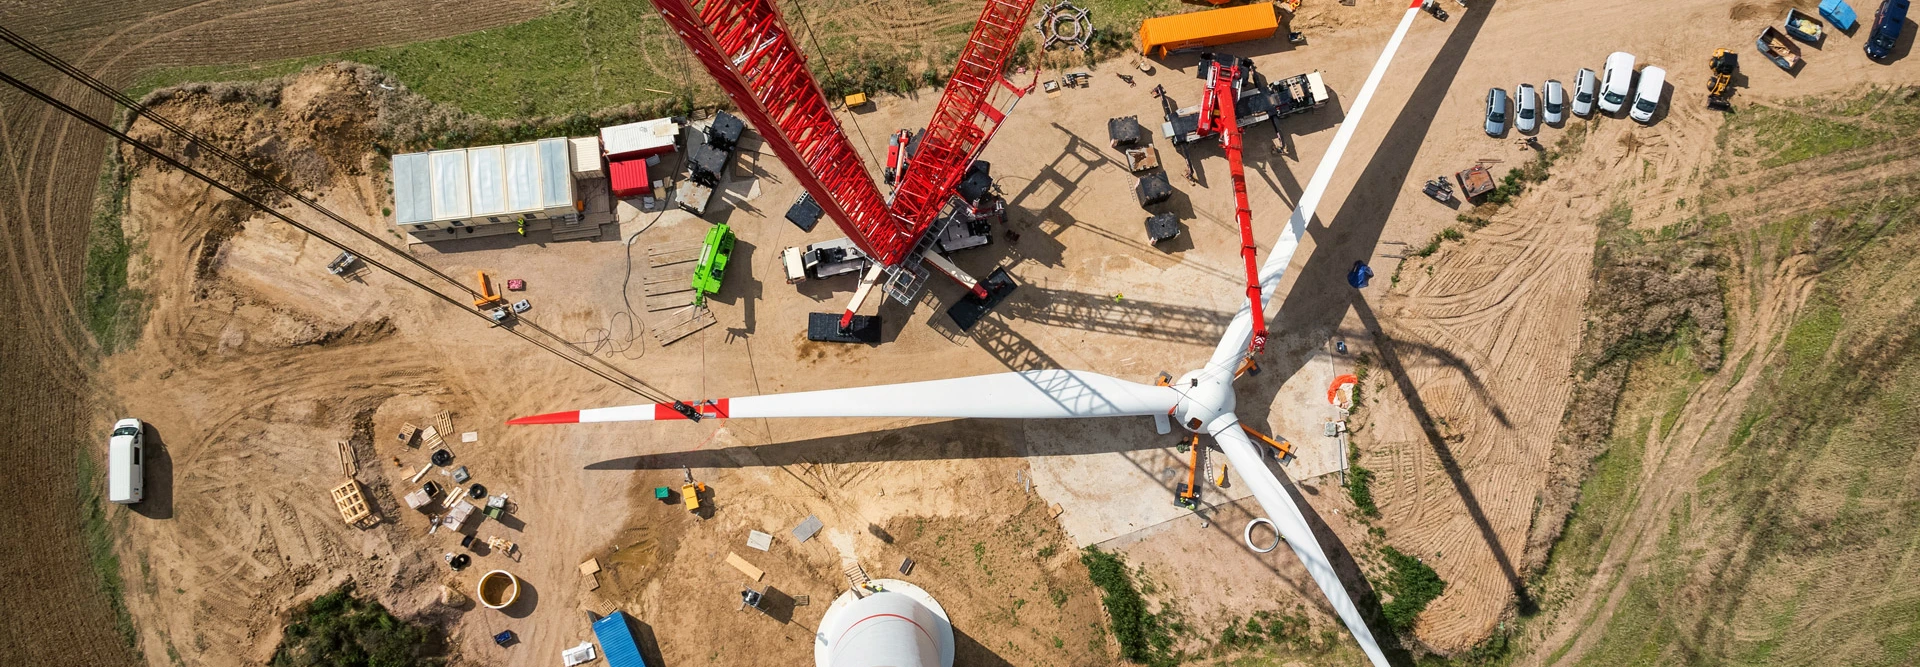 Ueberwachung Windpark Module Bauphase